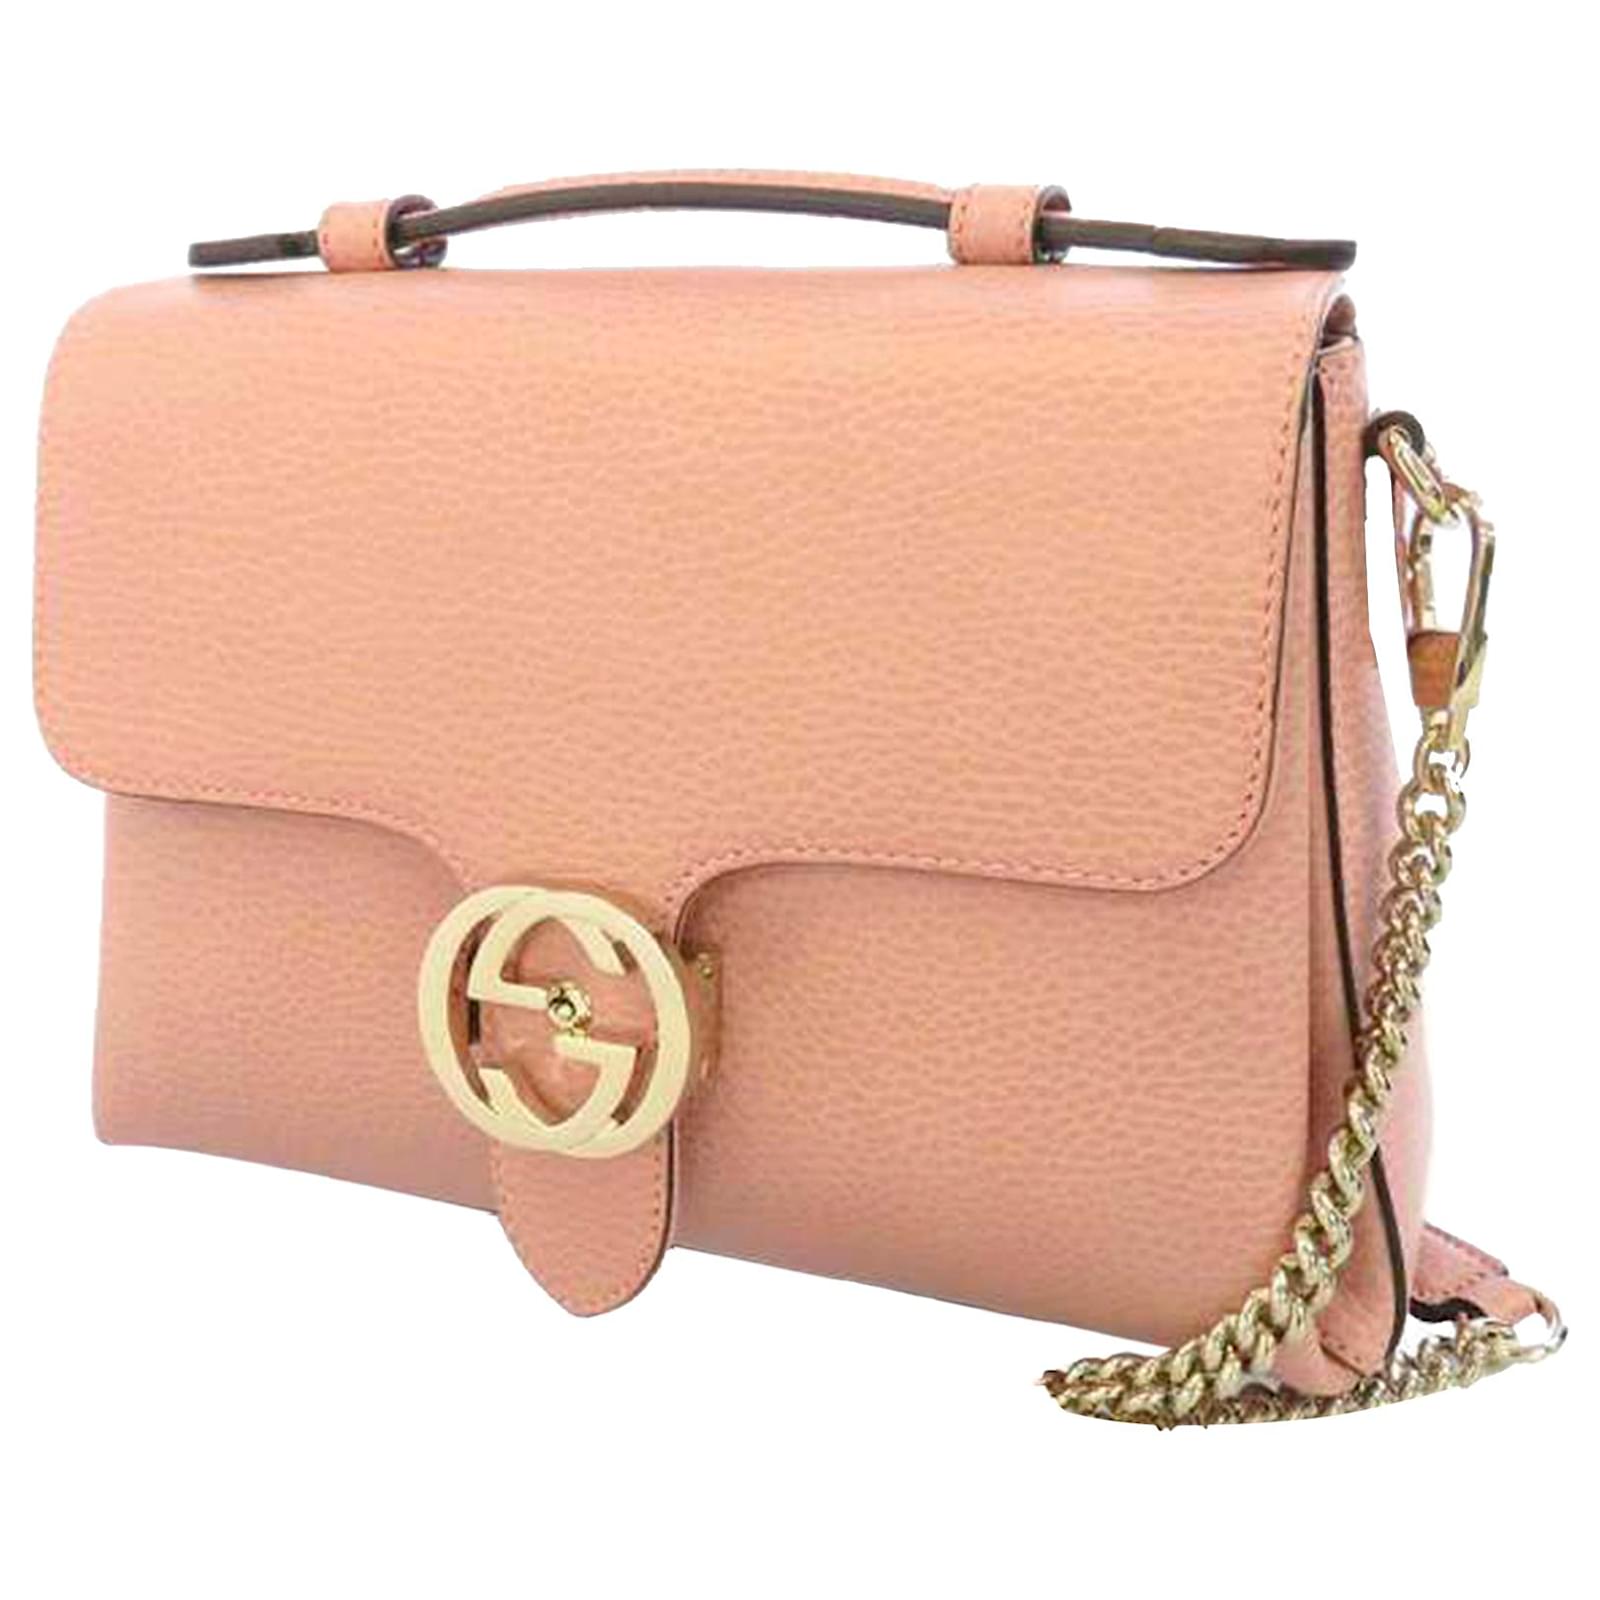 Gucci Interlocking G Leather Chain Shoulder Bag in Pink